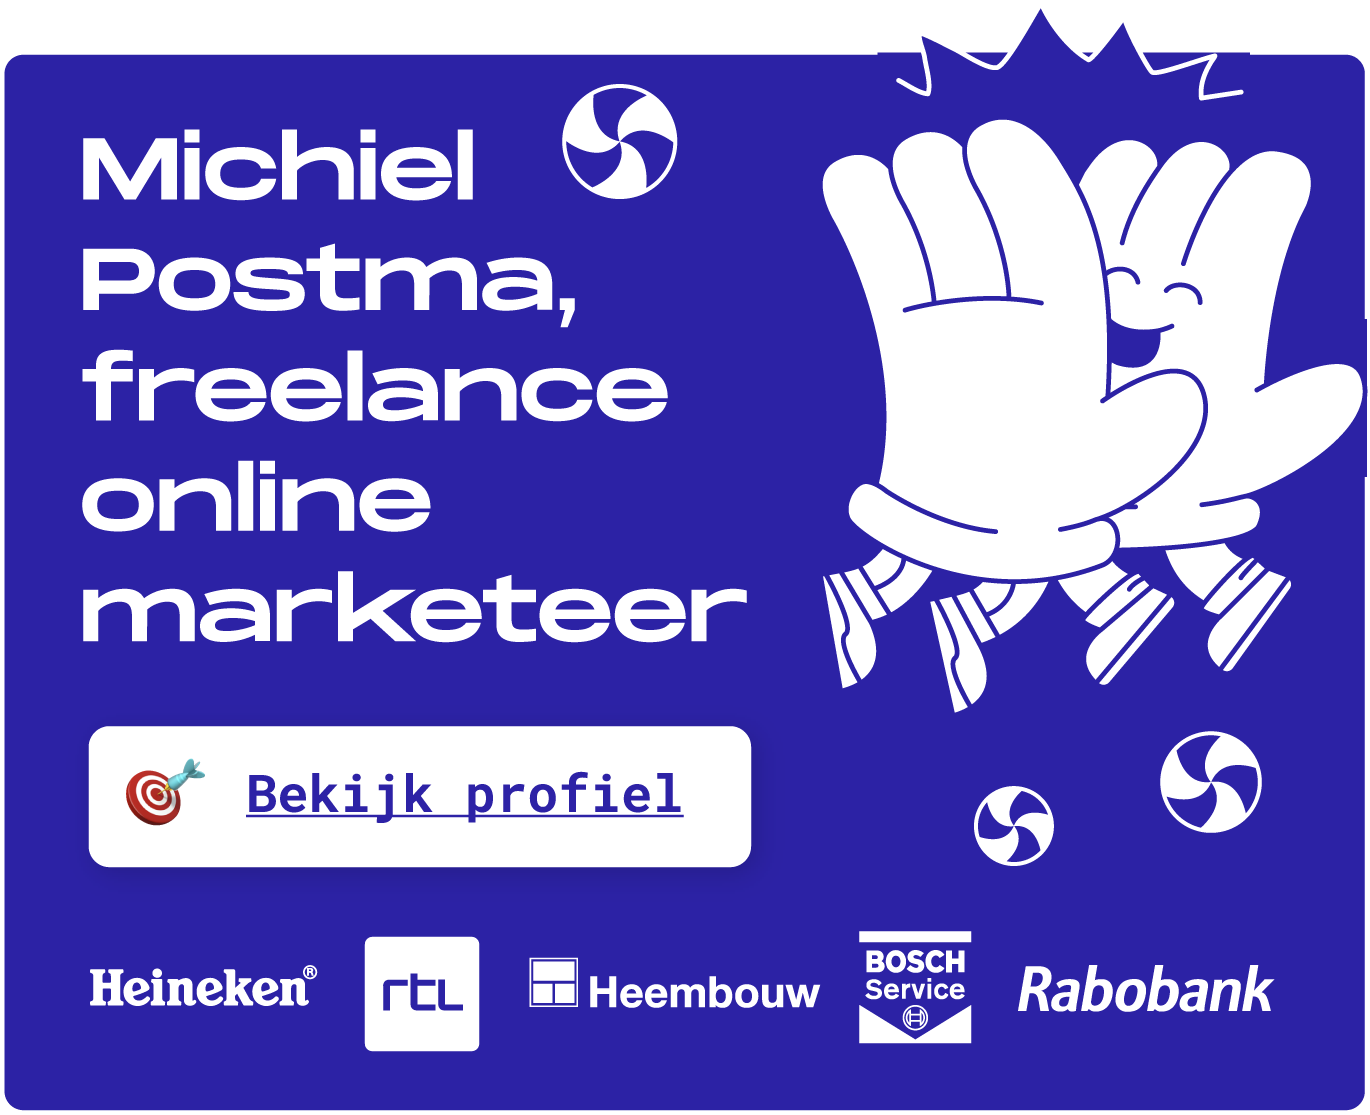 Freelance online marketeer, Michiel Postma